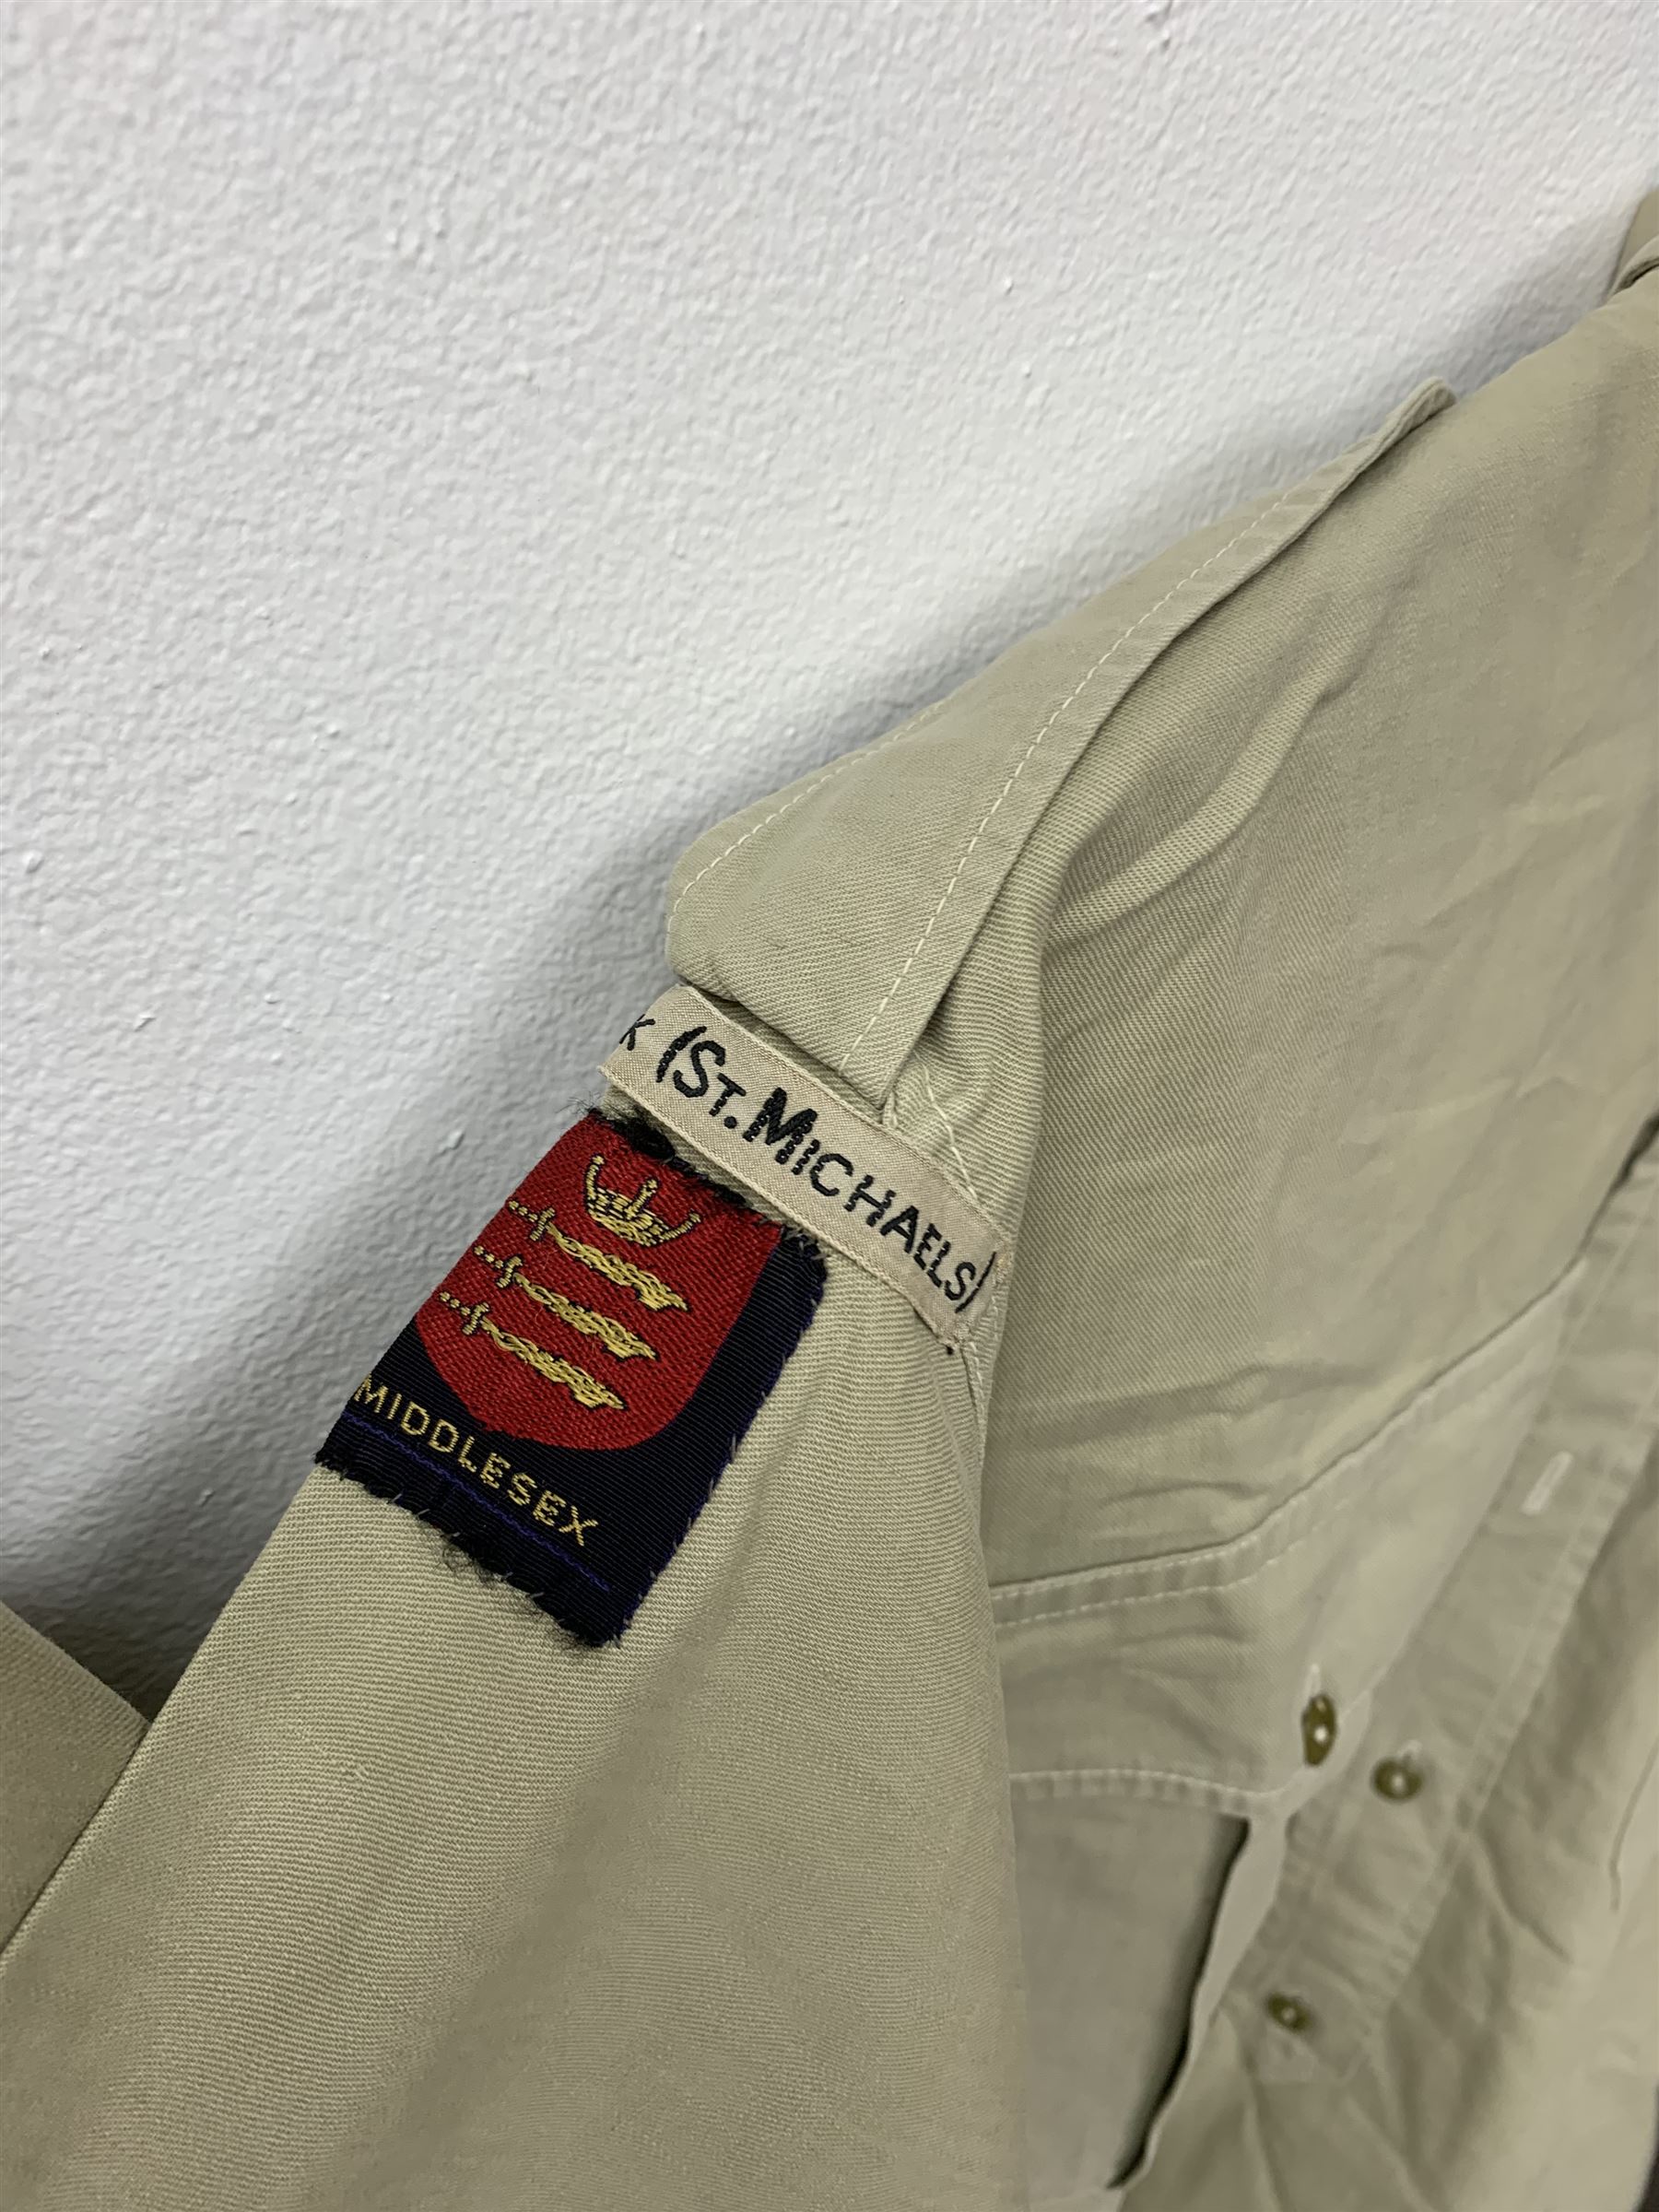 Mid 20th century Boy Scouts uniform - Image 5 of 8